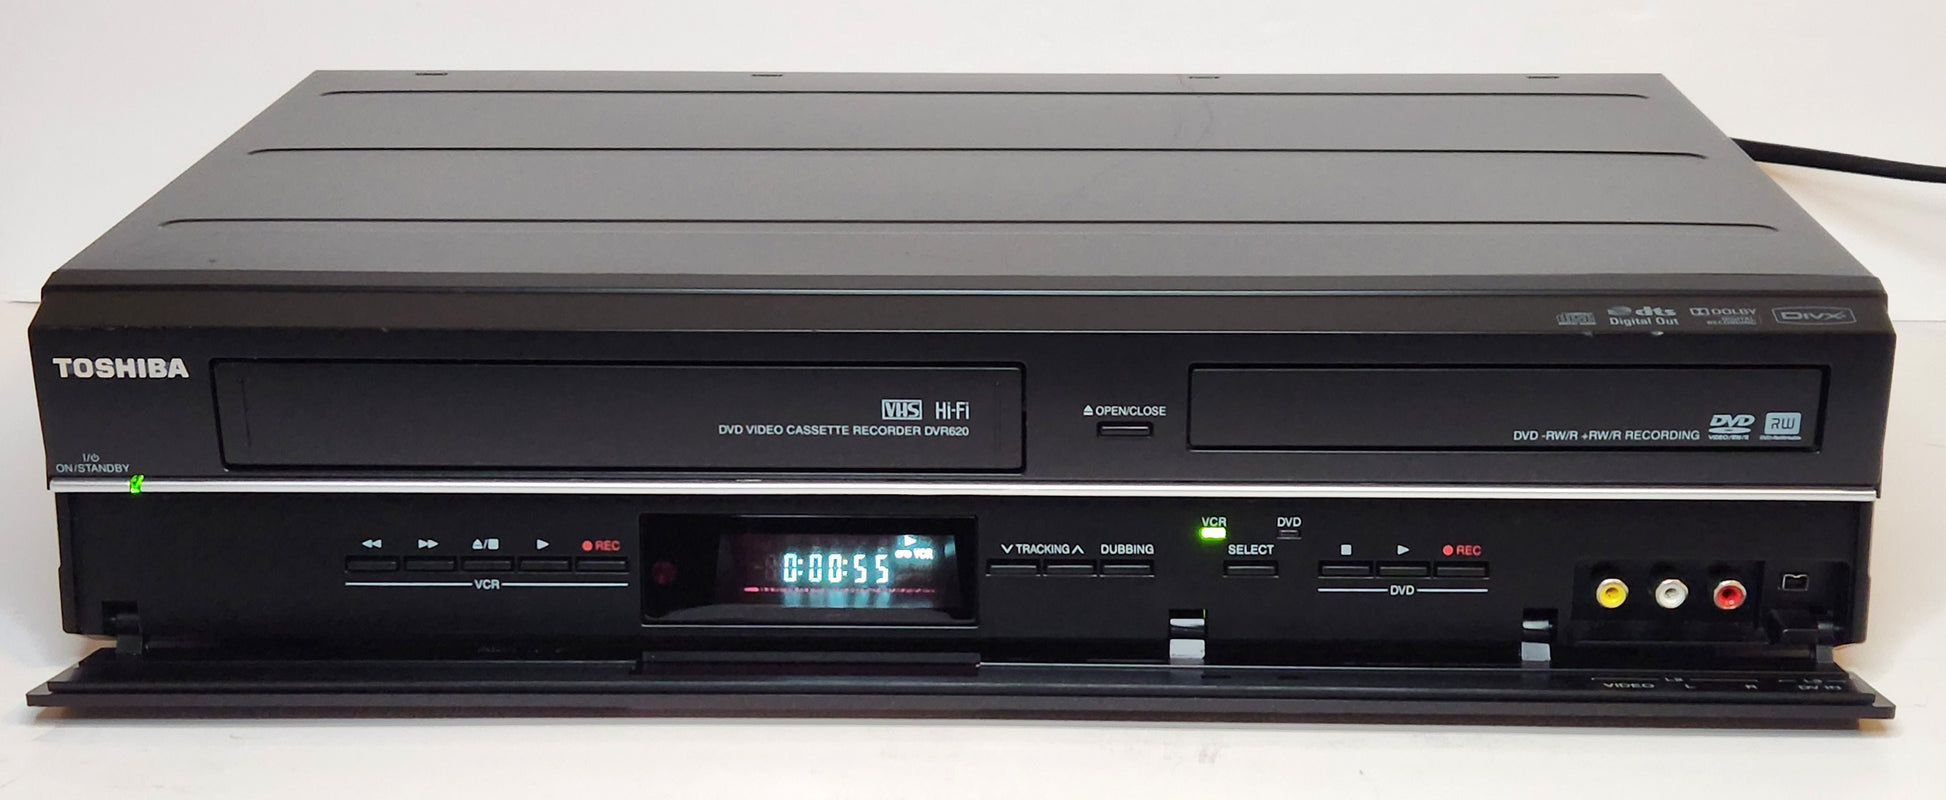 Toshiba D-VR16 DVD/Video recorder DVD/VHS recorder combi no remote (807)